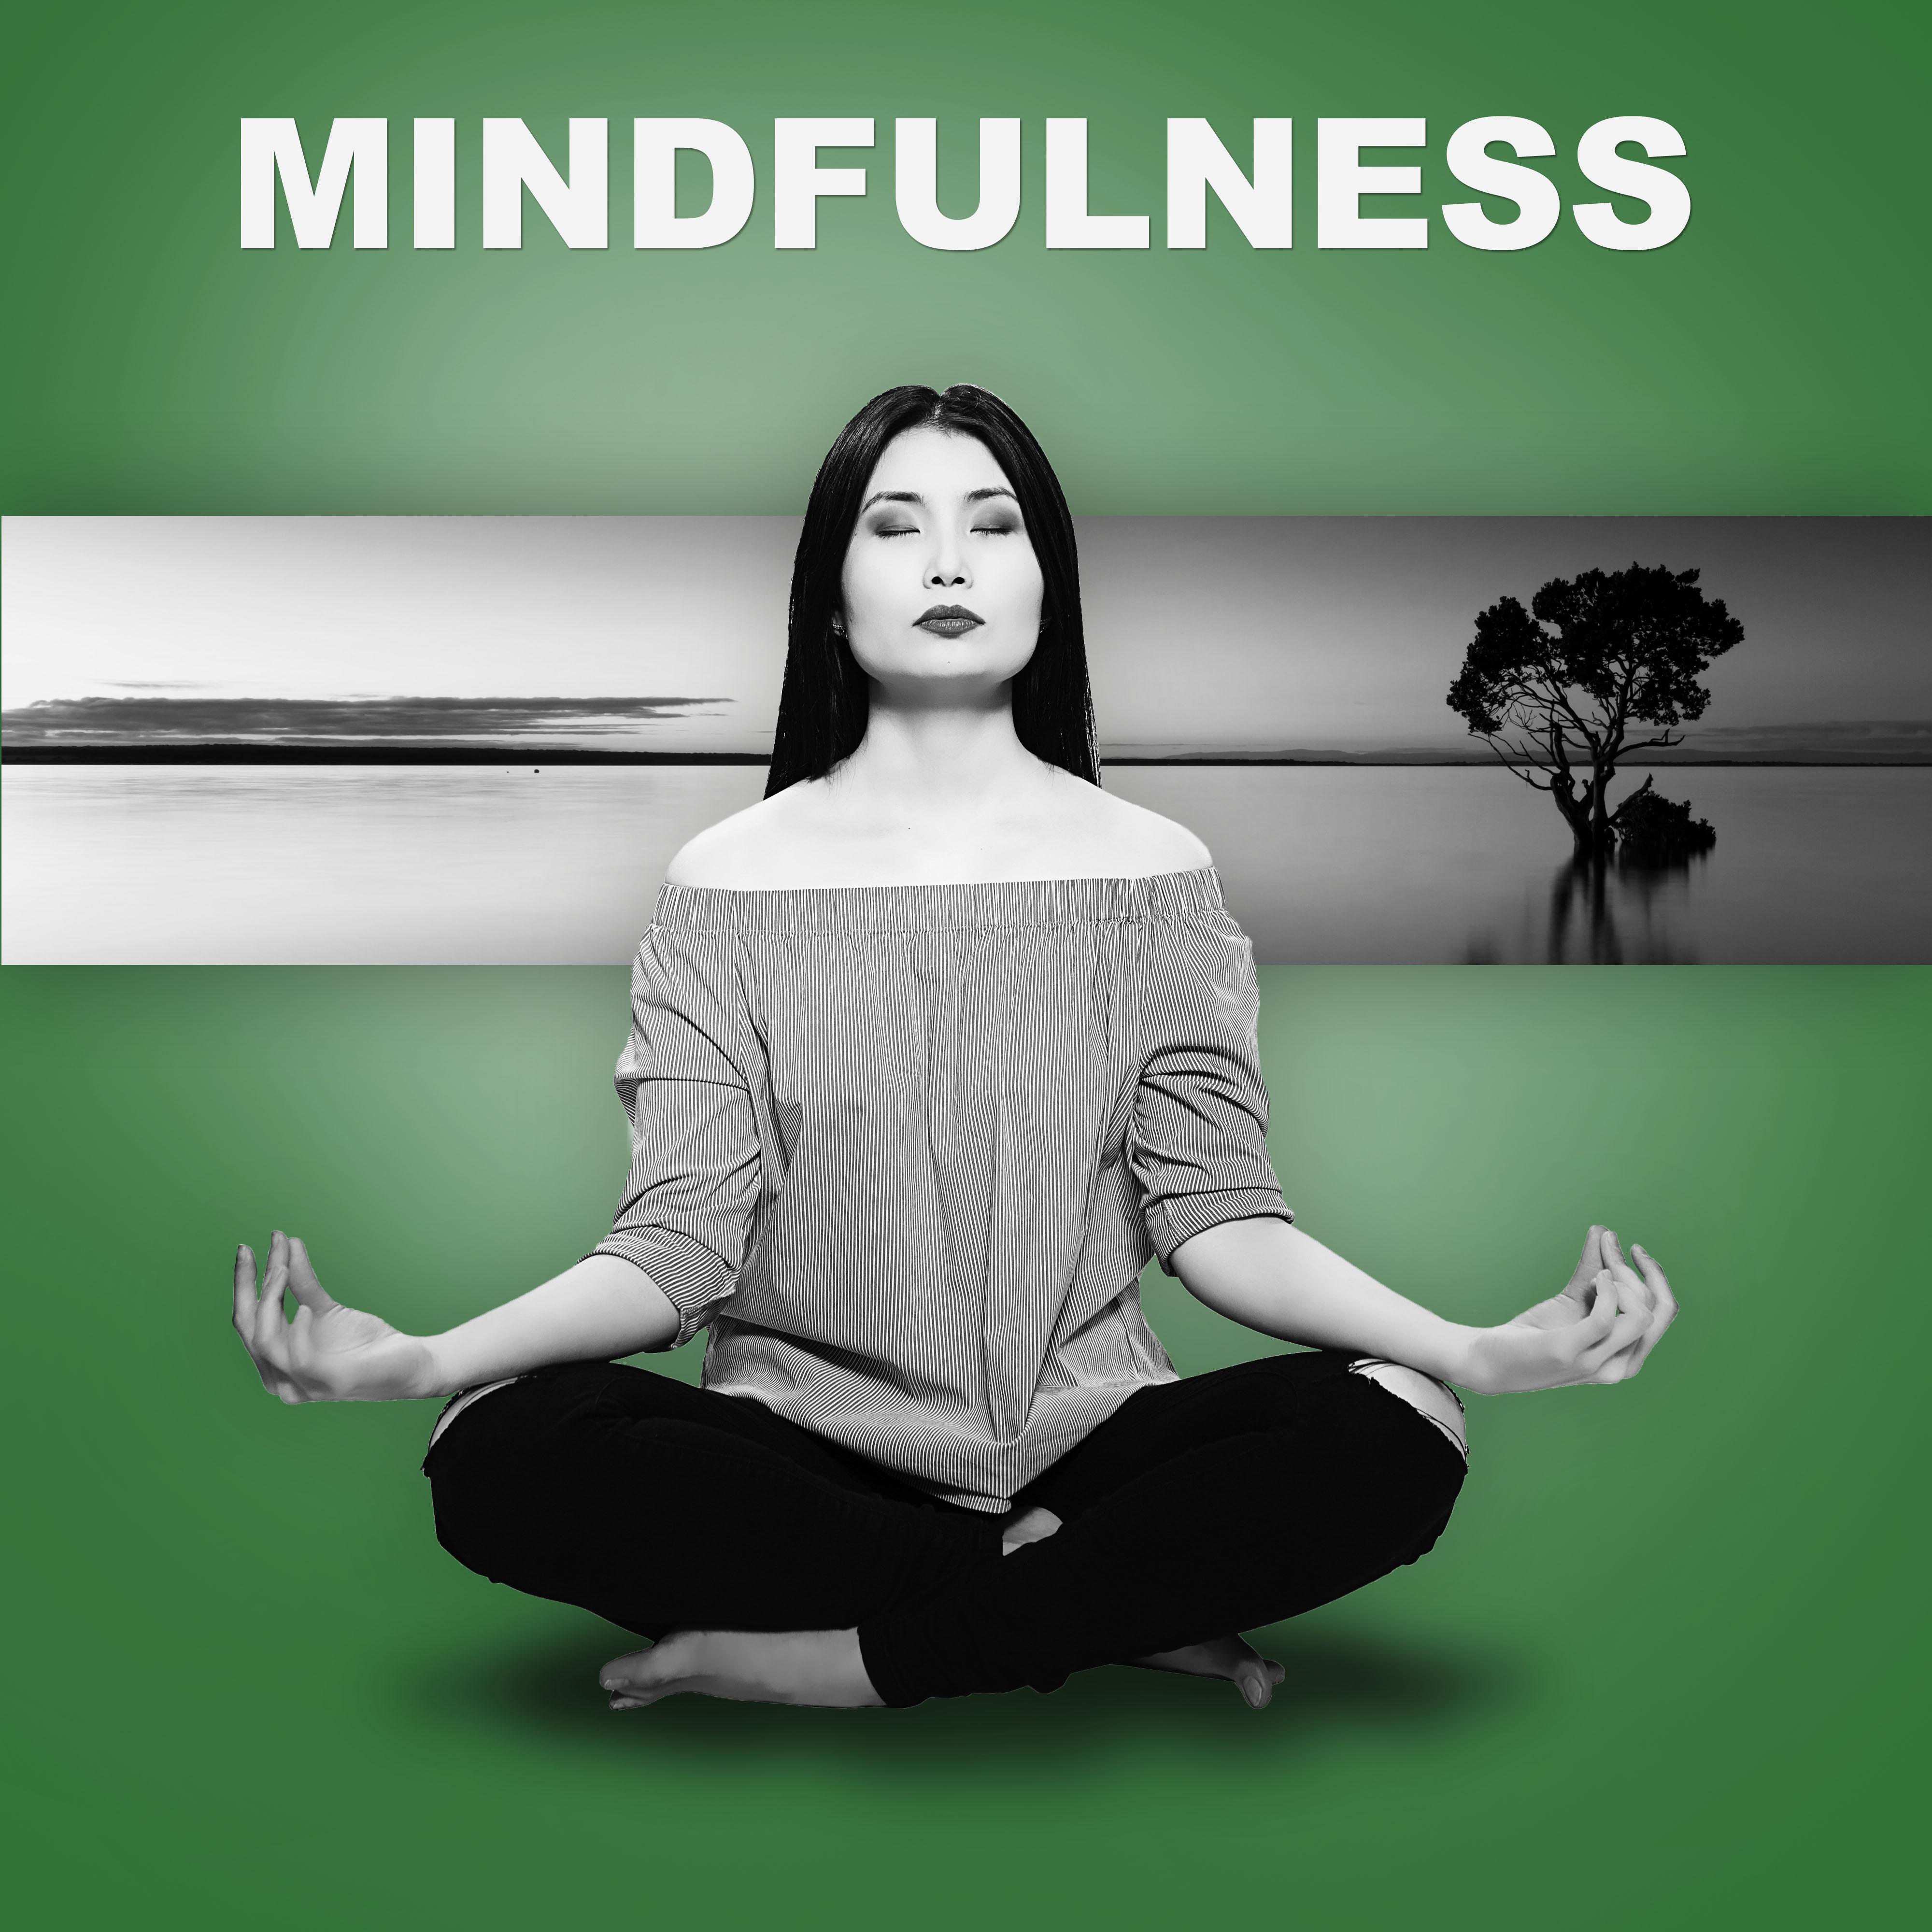 Mindfulness  Peaceful Meditation Music to Calm Down  Mindfulness Practise, Yoga, Mantra, Healing Nature Sounds, Zen Garden, Chakra Balancing, Relaxation  Sleep